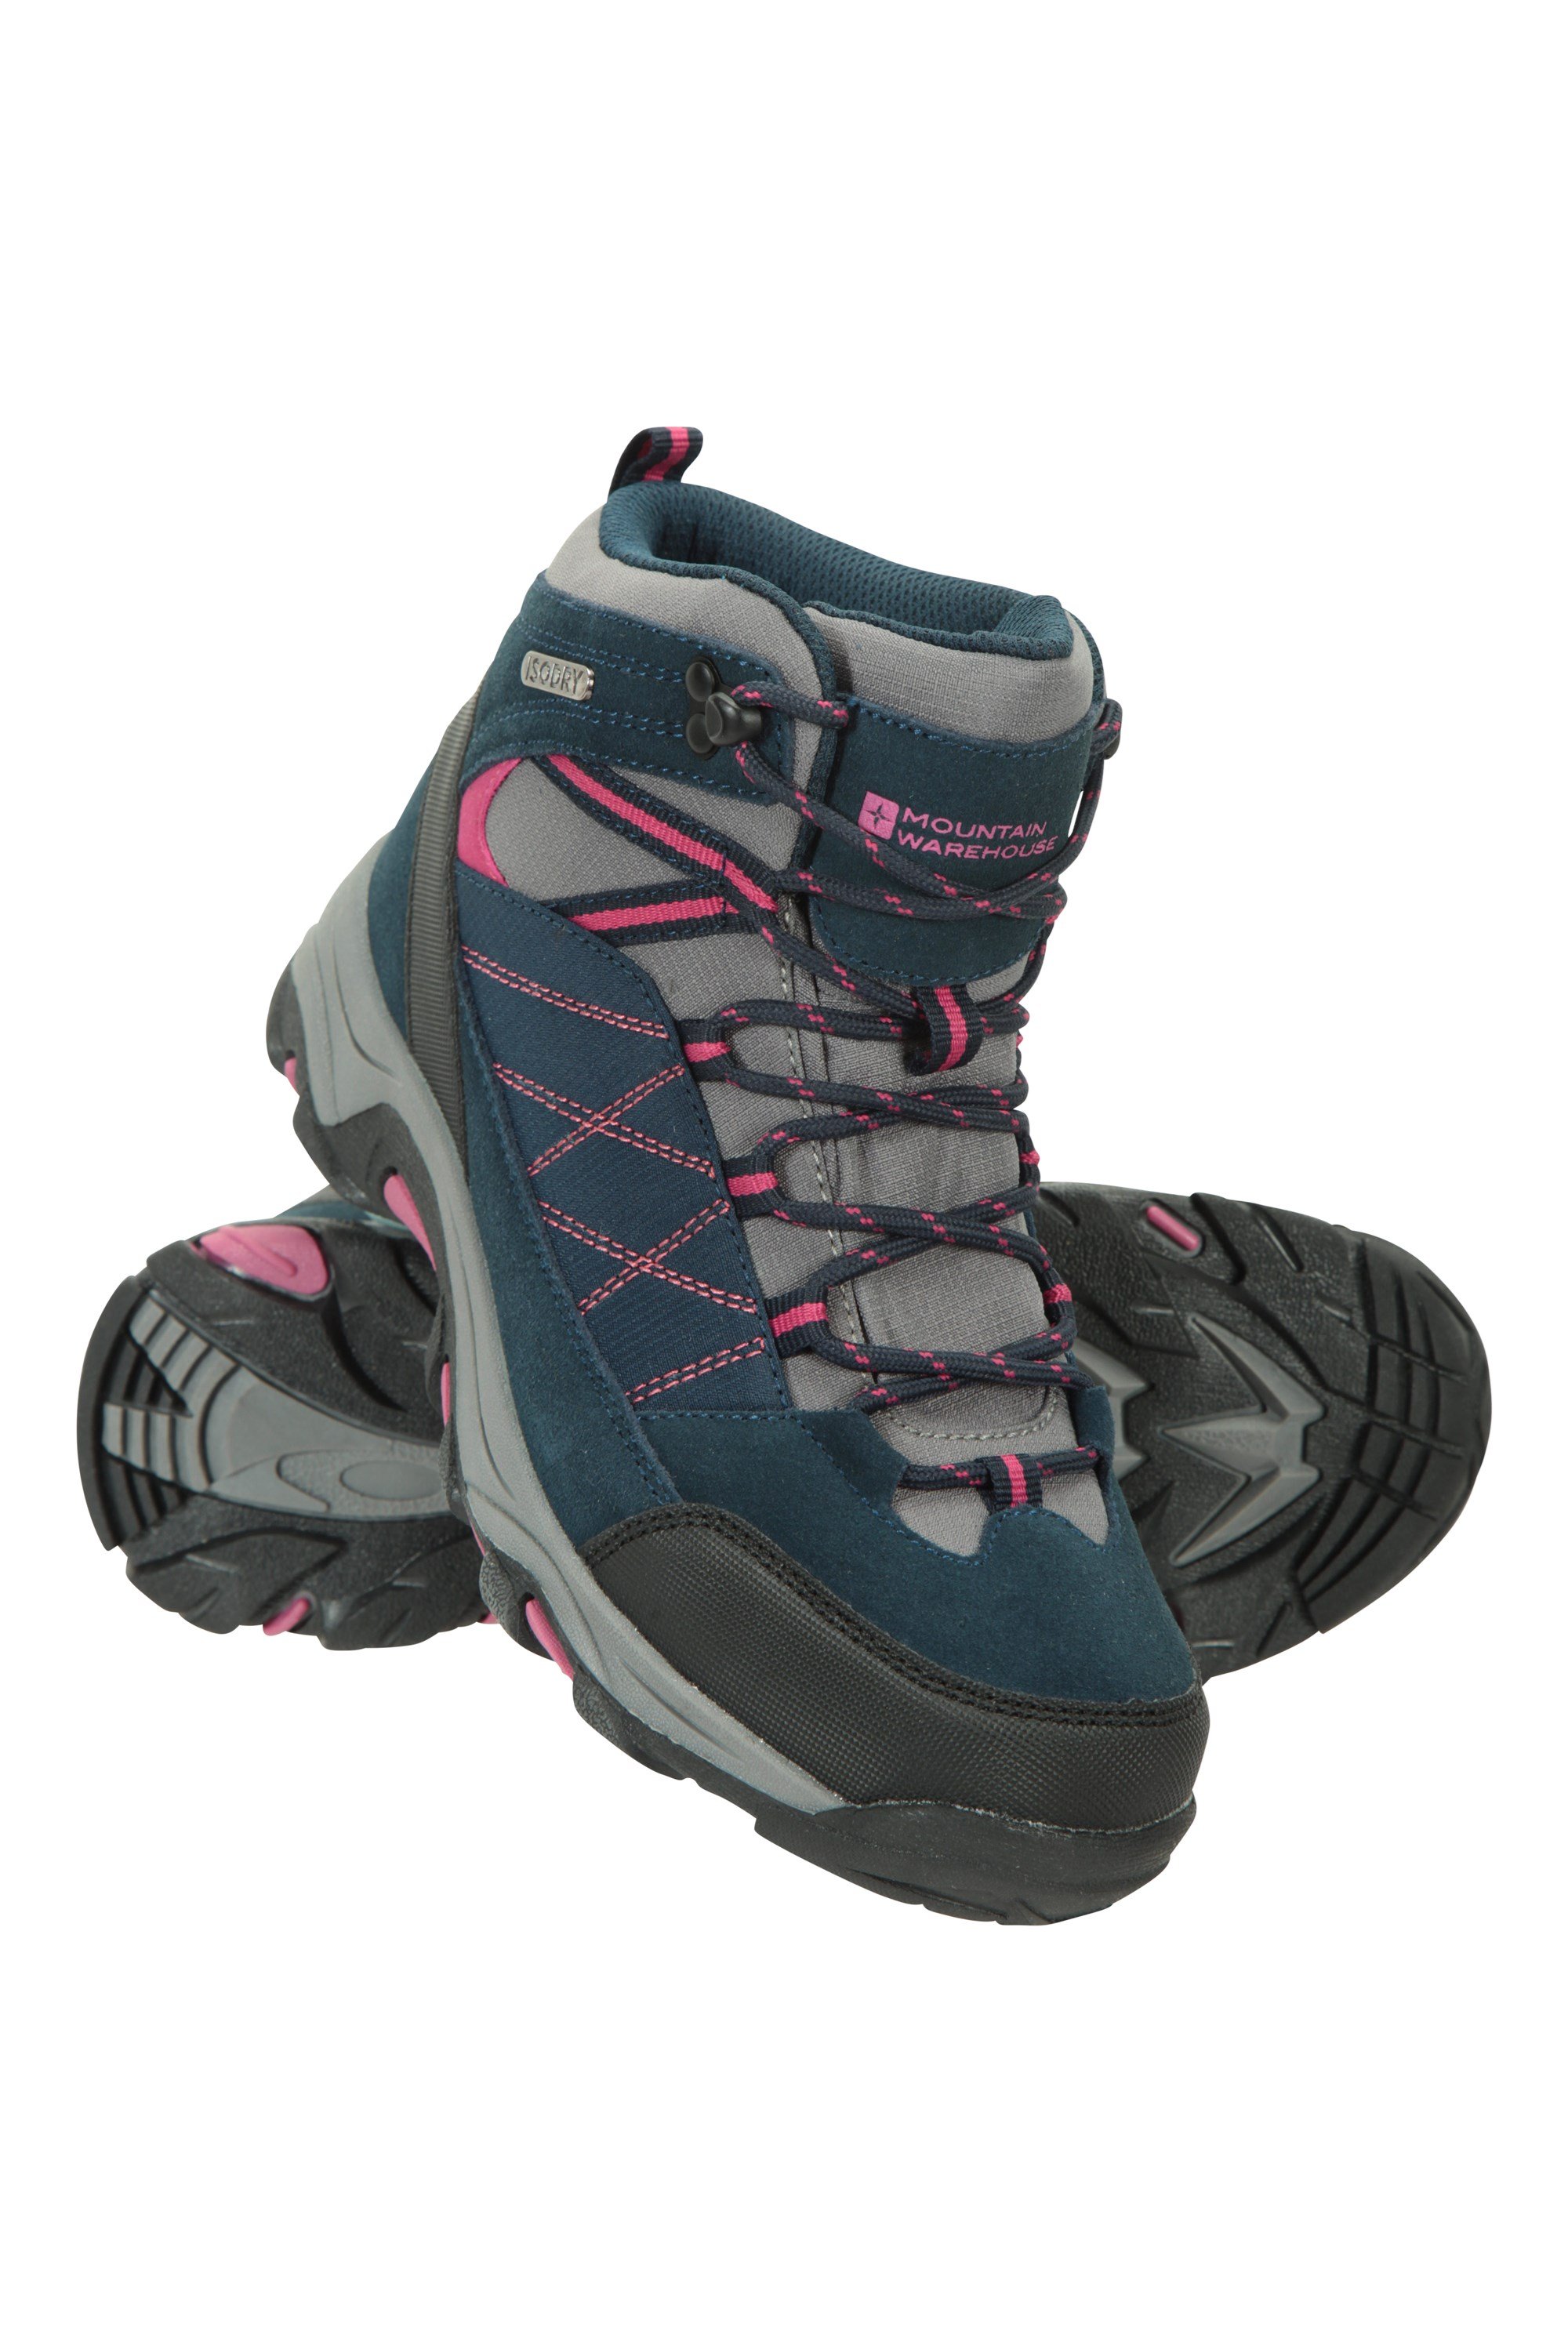 Mountain Warehouse Womens Waterproof Walking Boots Suede Upper 